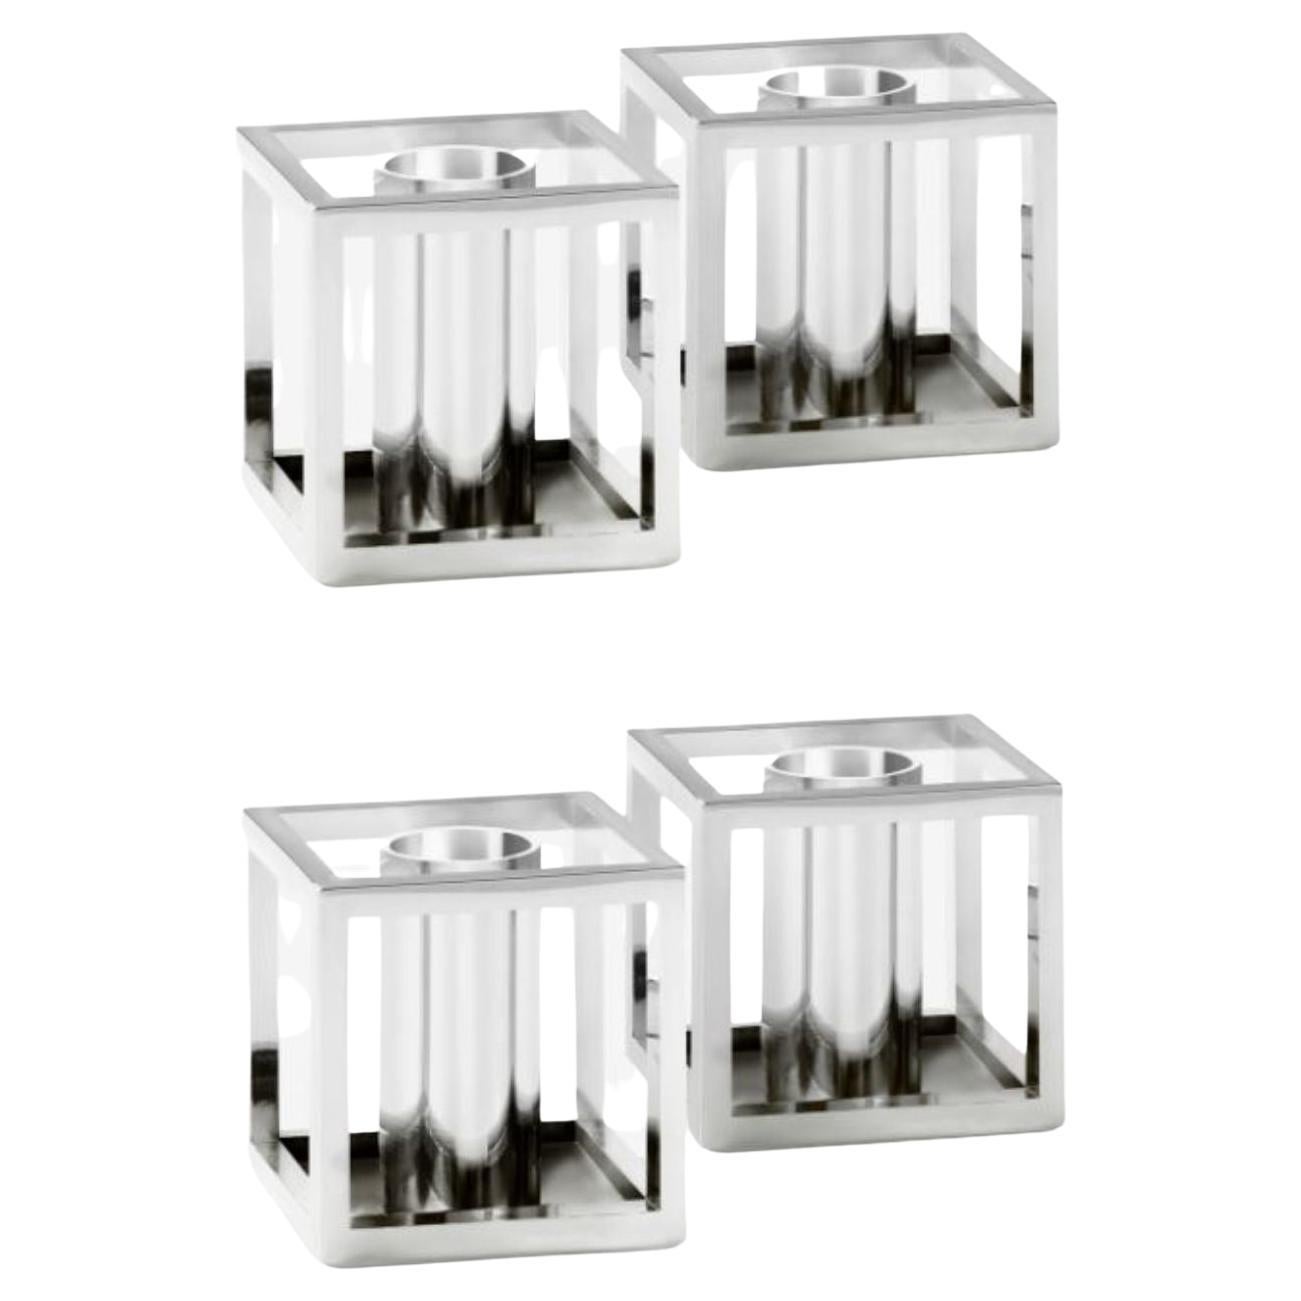 Set von 4 vernickelten Kubus- Mikro-Kerzenhaltern von Lassen